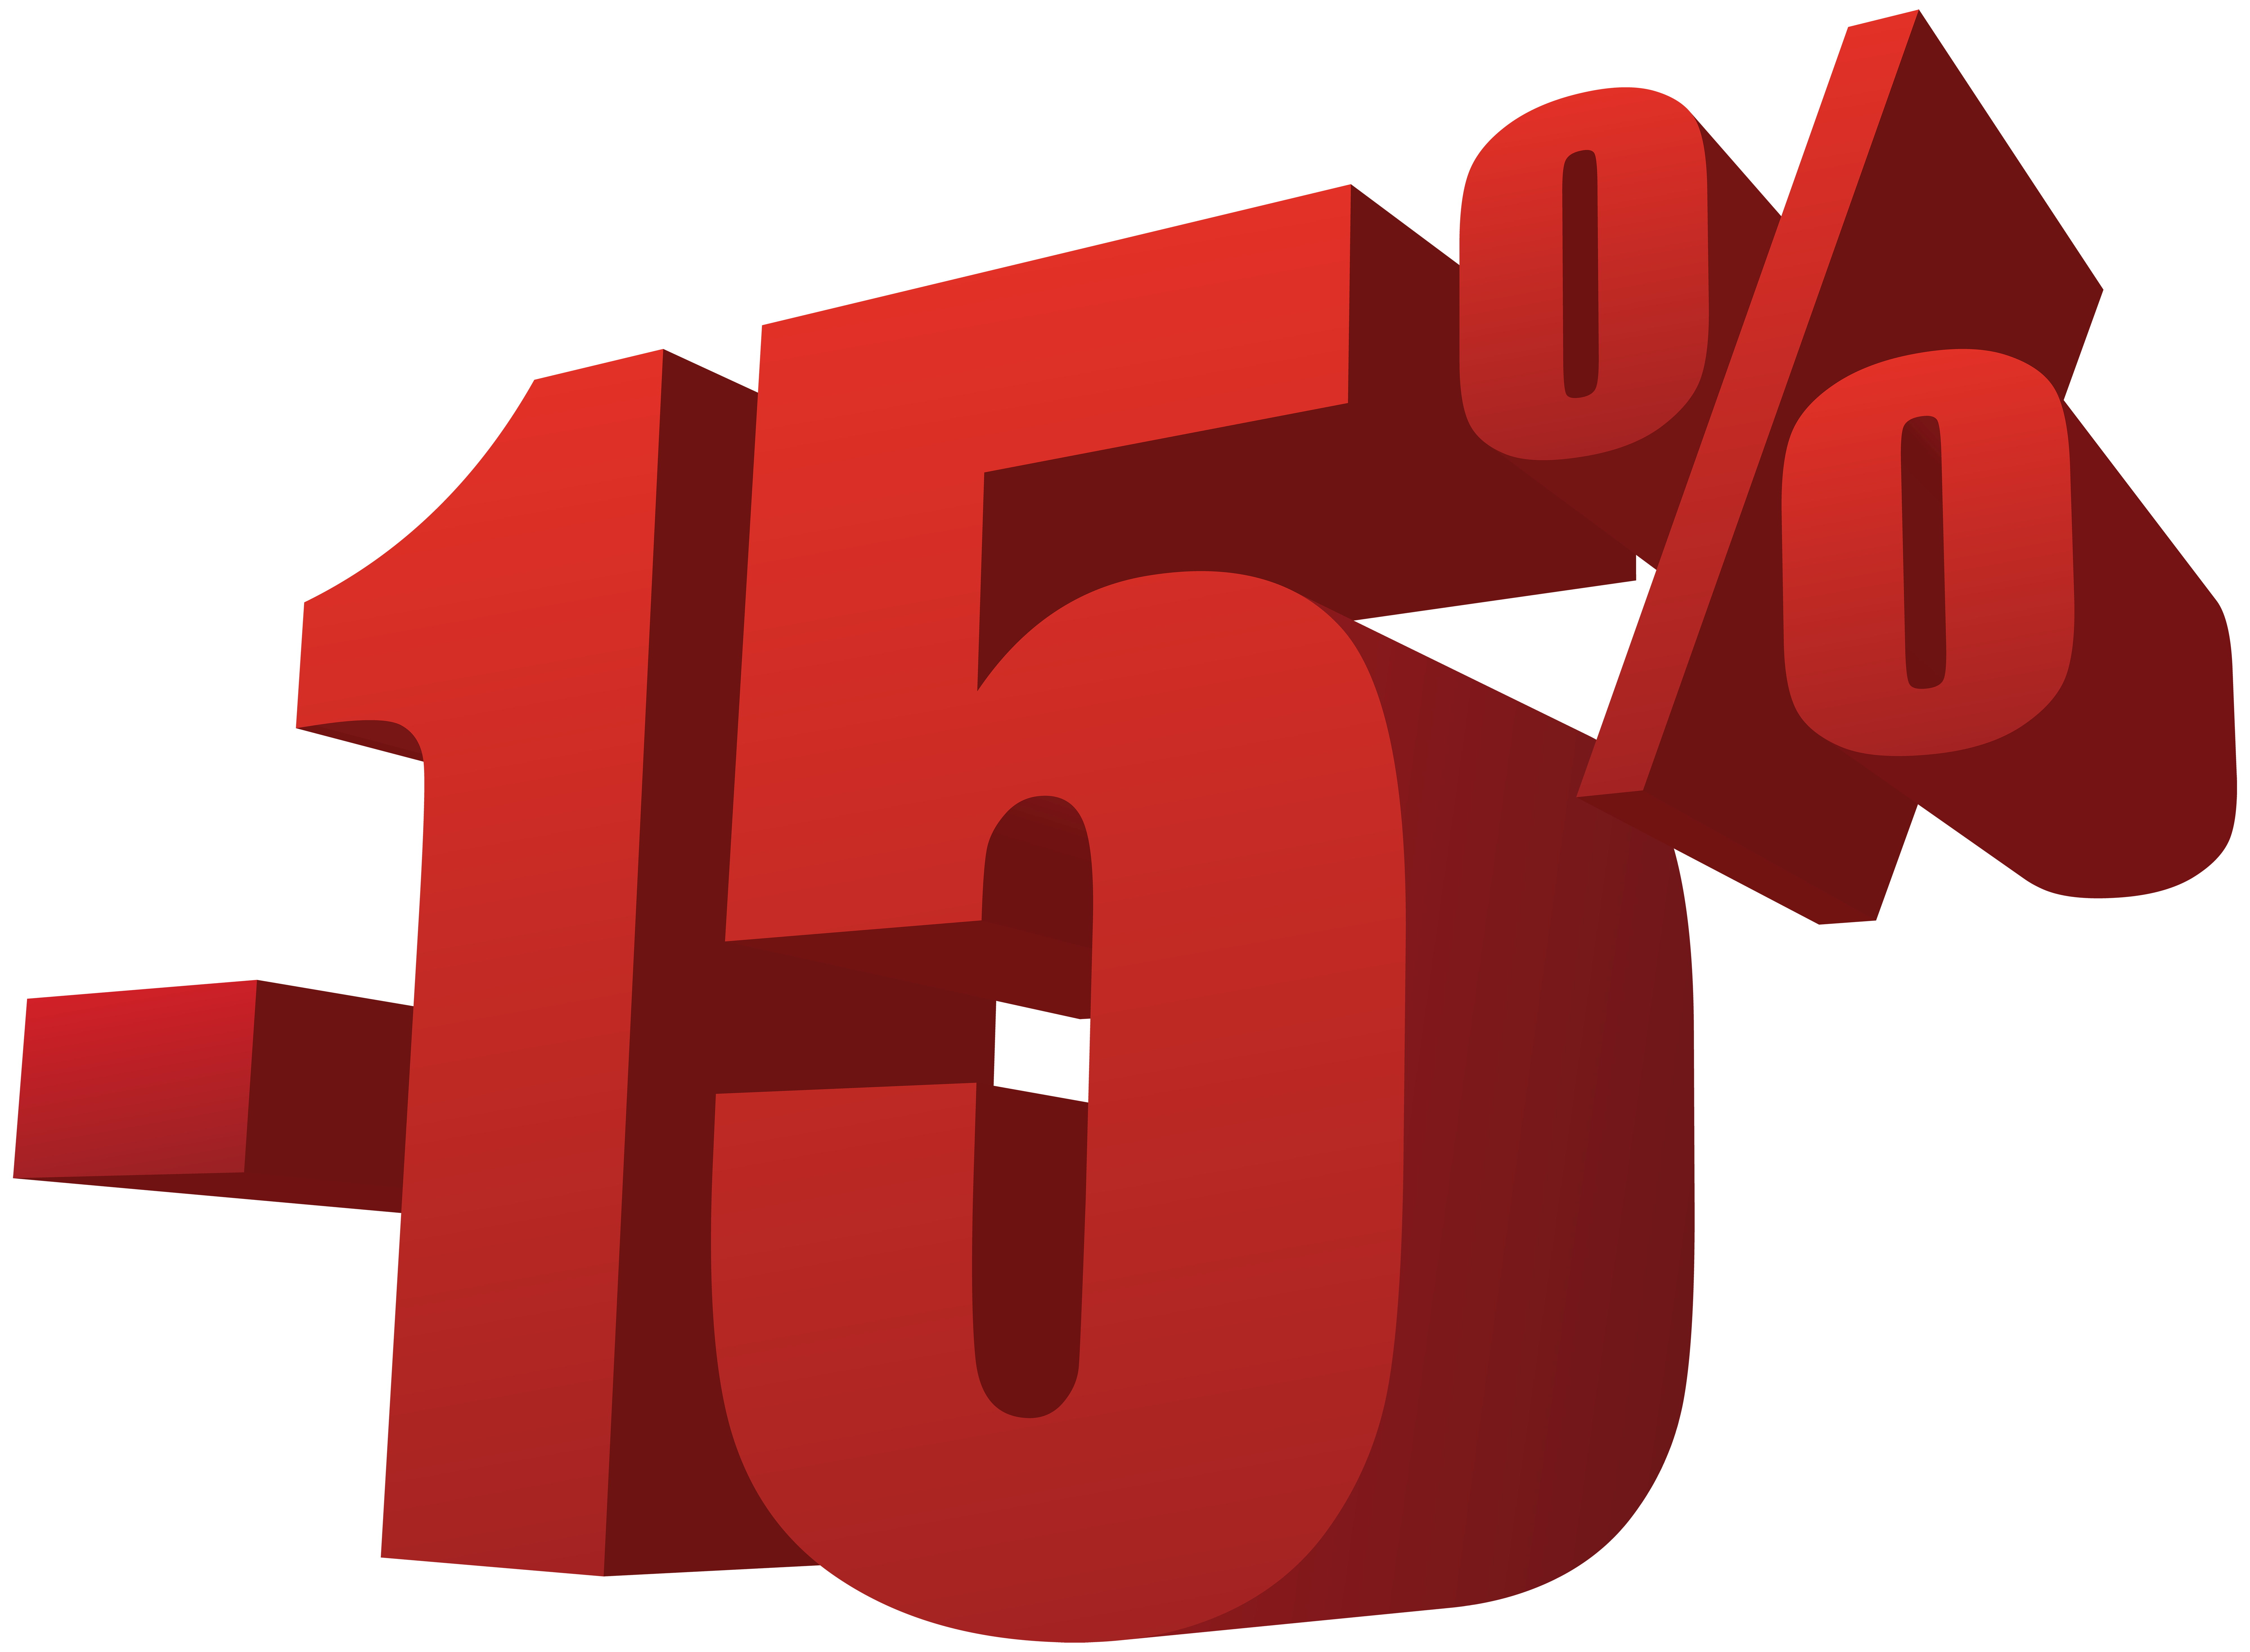 15% Off Sale PNG Transparent Image.